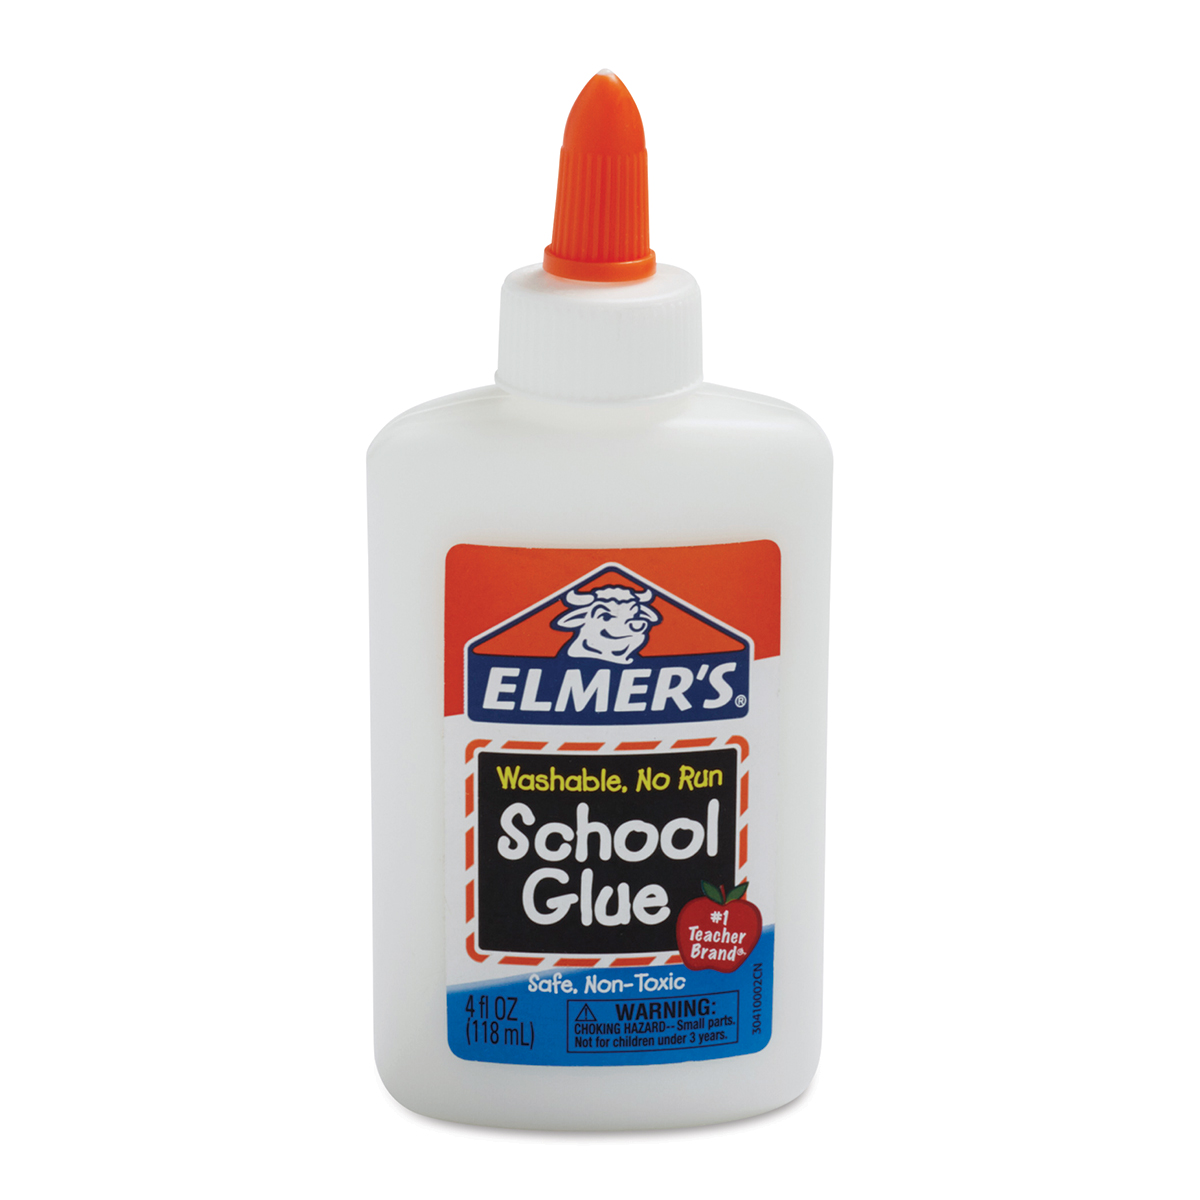 File:Elmer's School Glue historic packaging.JPG - Wikipedia